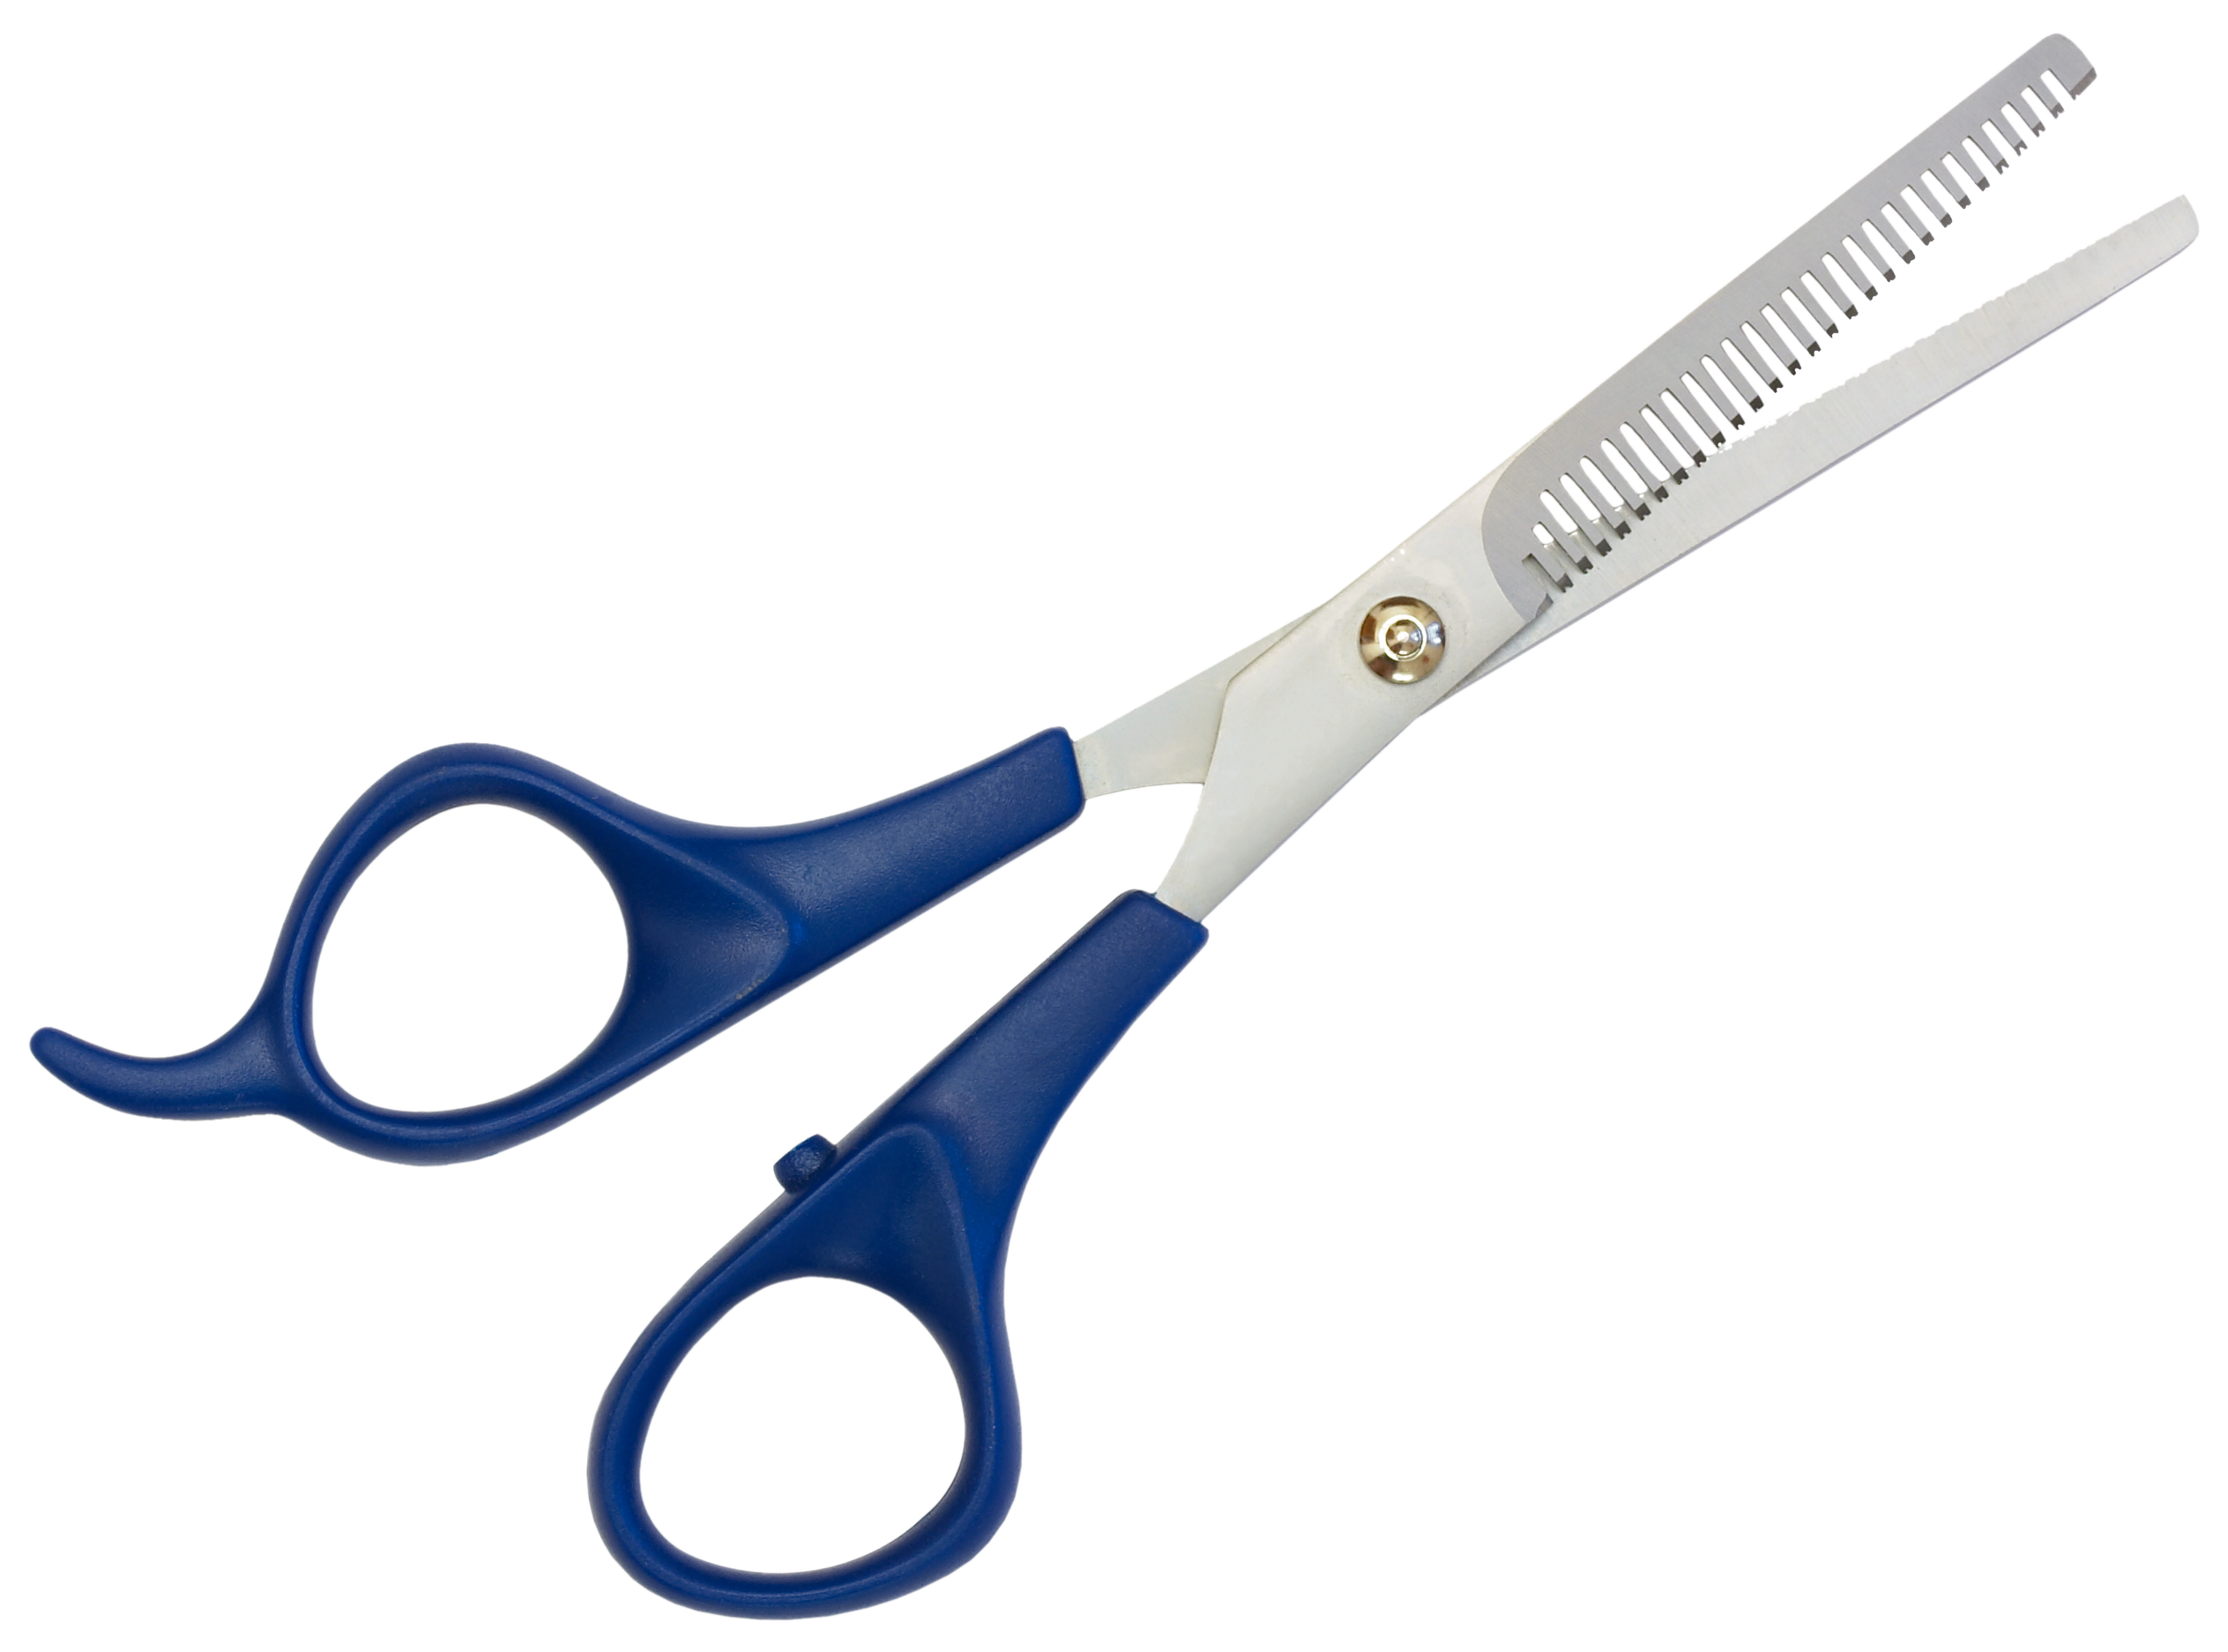 Thinning scissors.png - ClipArt Best - ClipArt Best